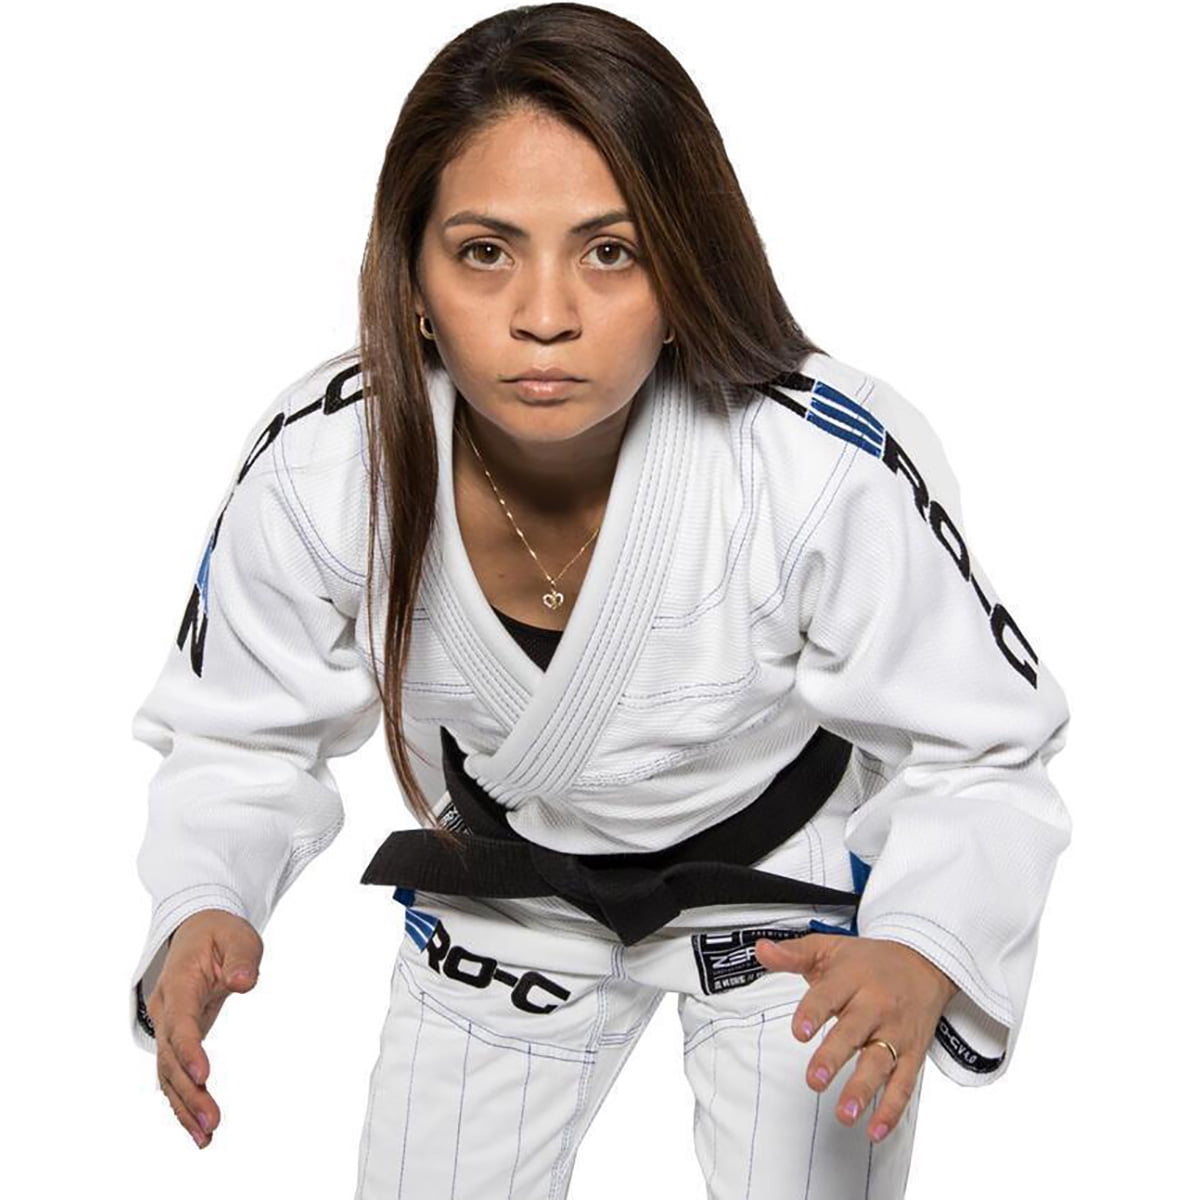 Tatami Zero G V4 Ladies BJJ Gi White Brazilian Jiu Jitsu Suit Womens Uniform 